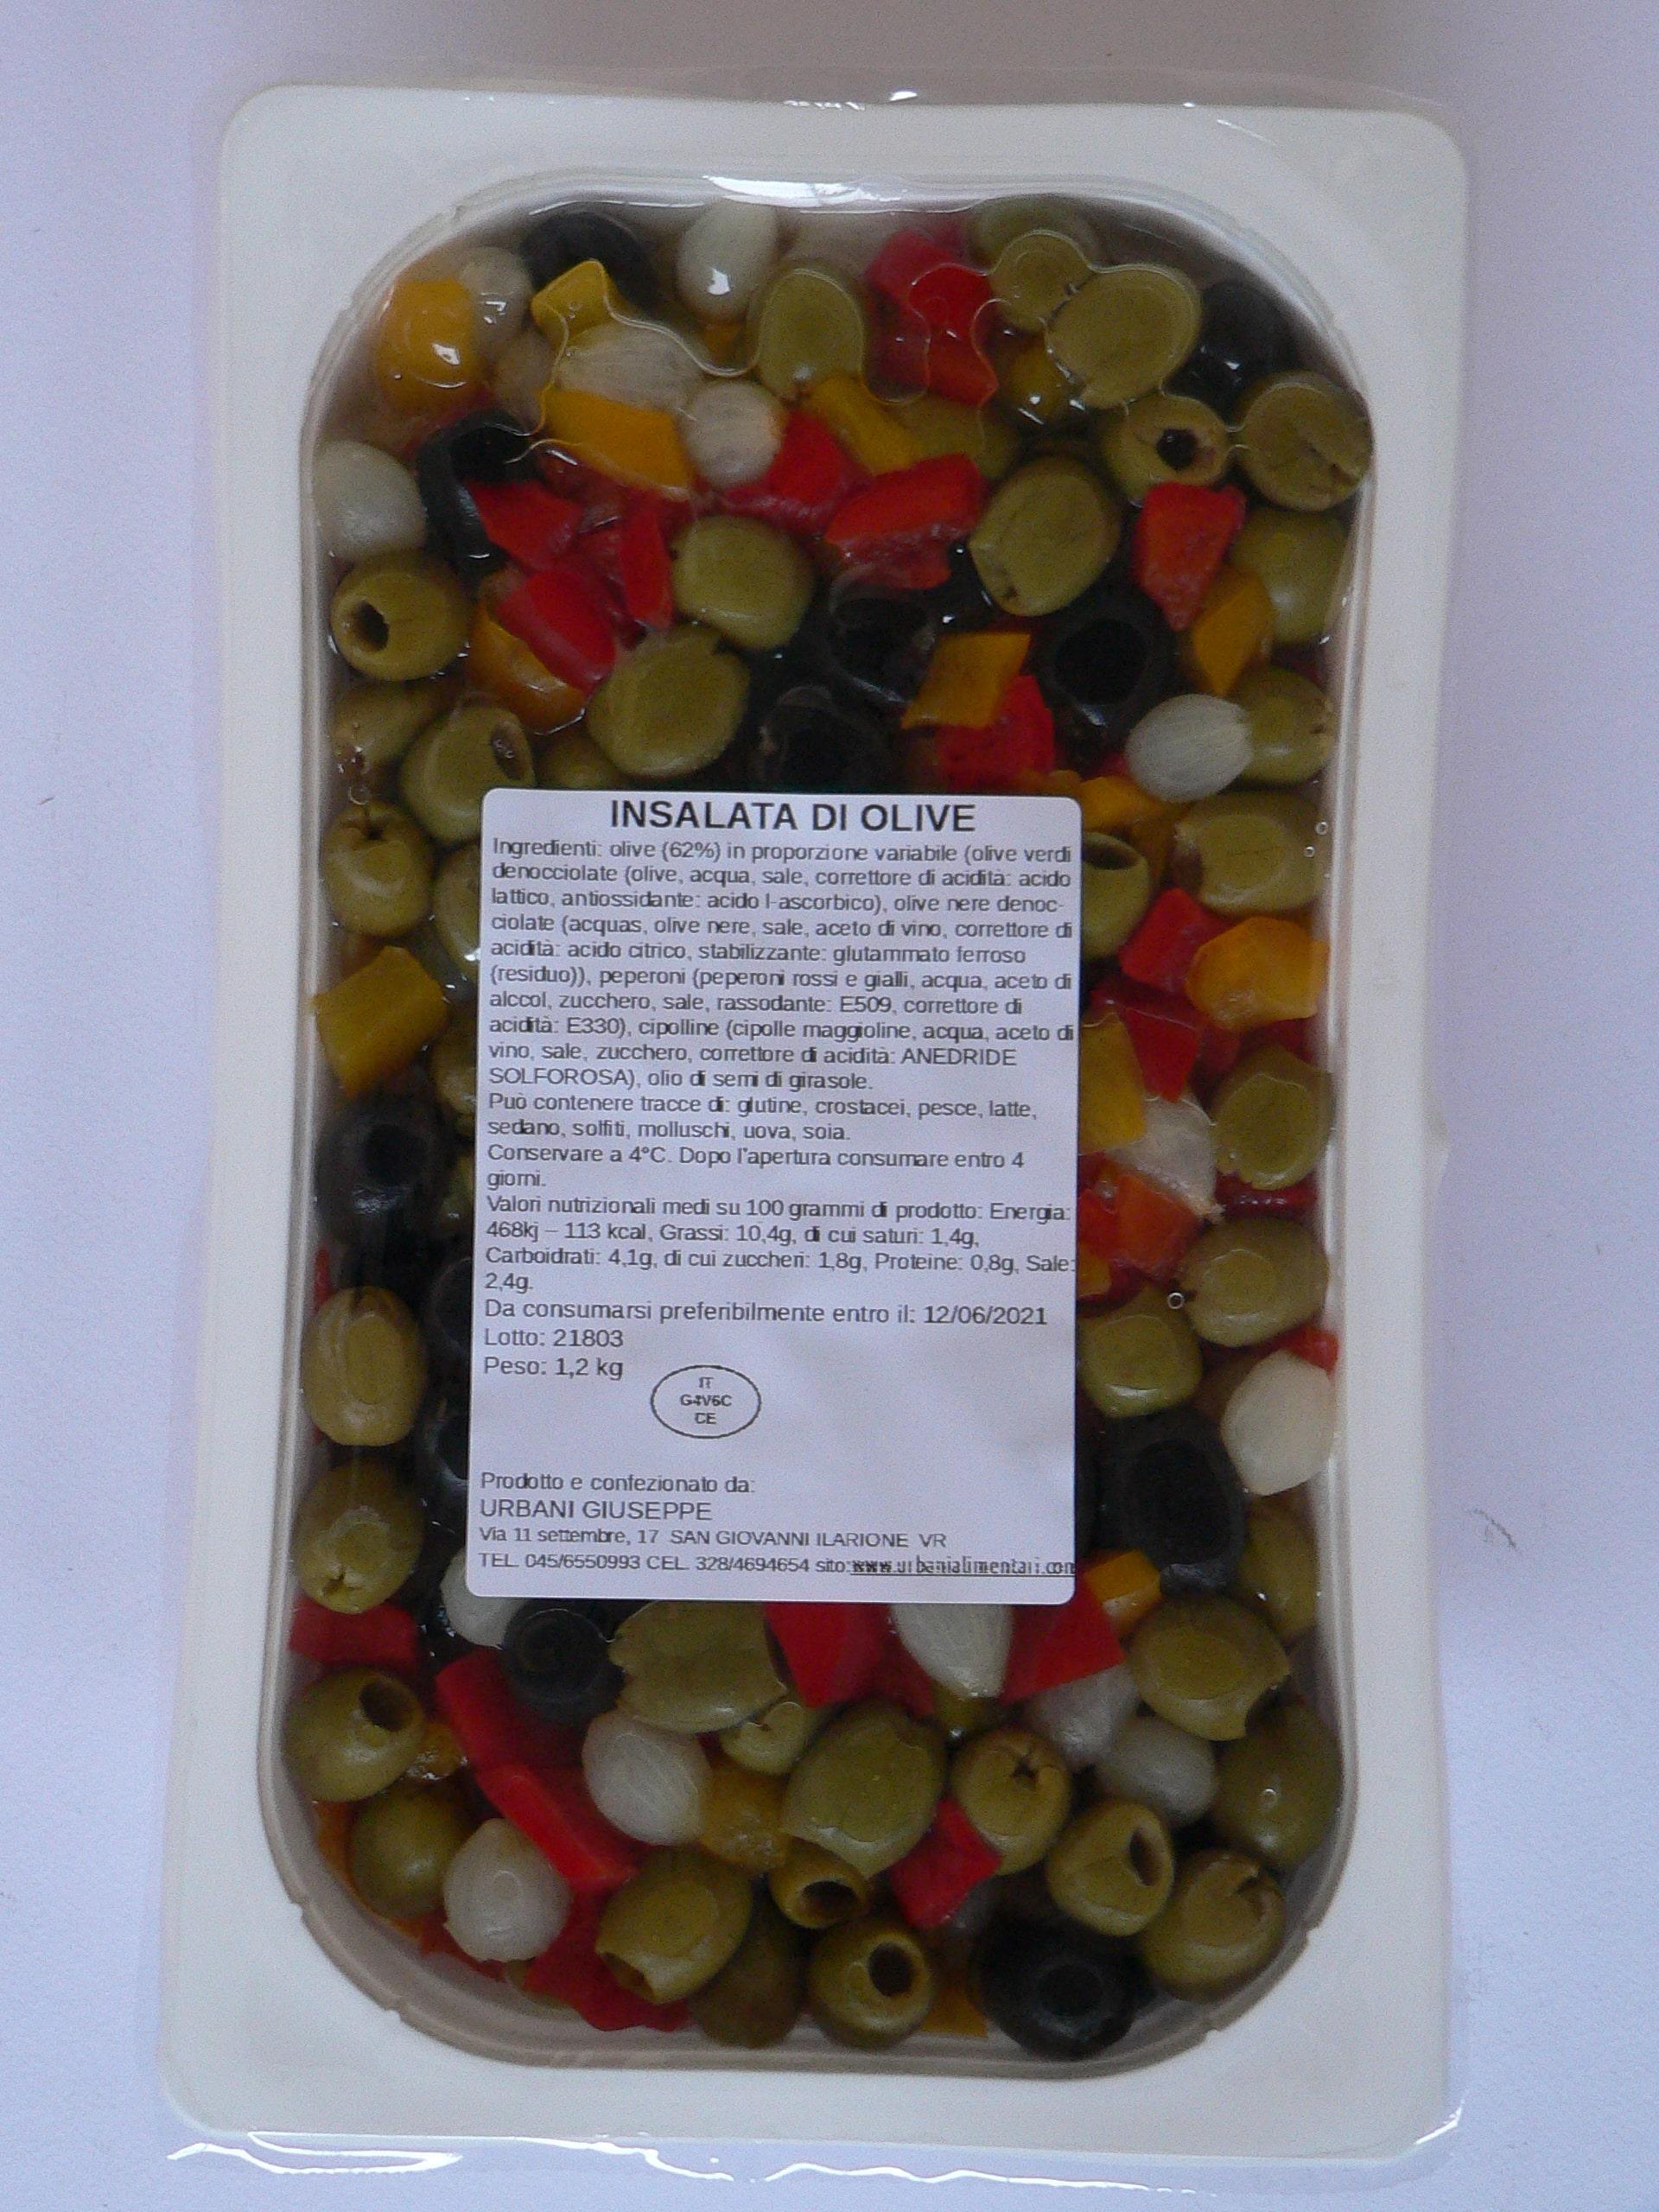 insalata di olive 1kg